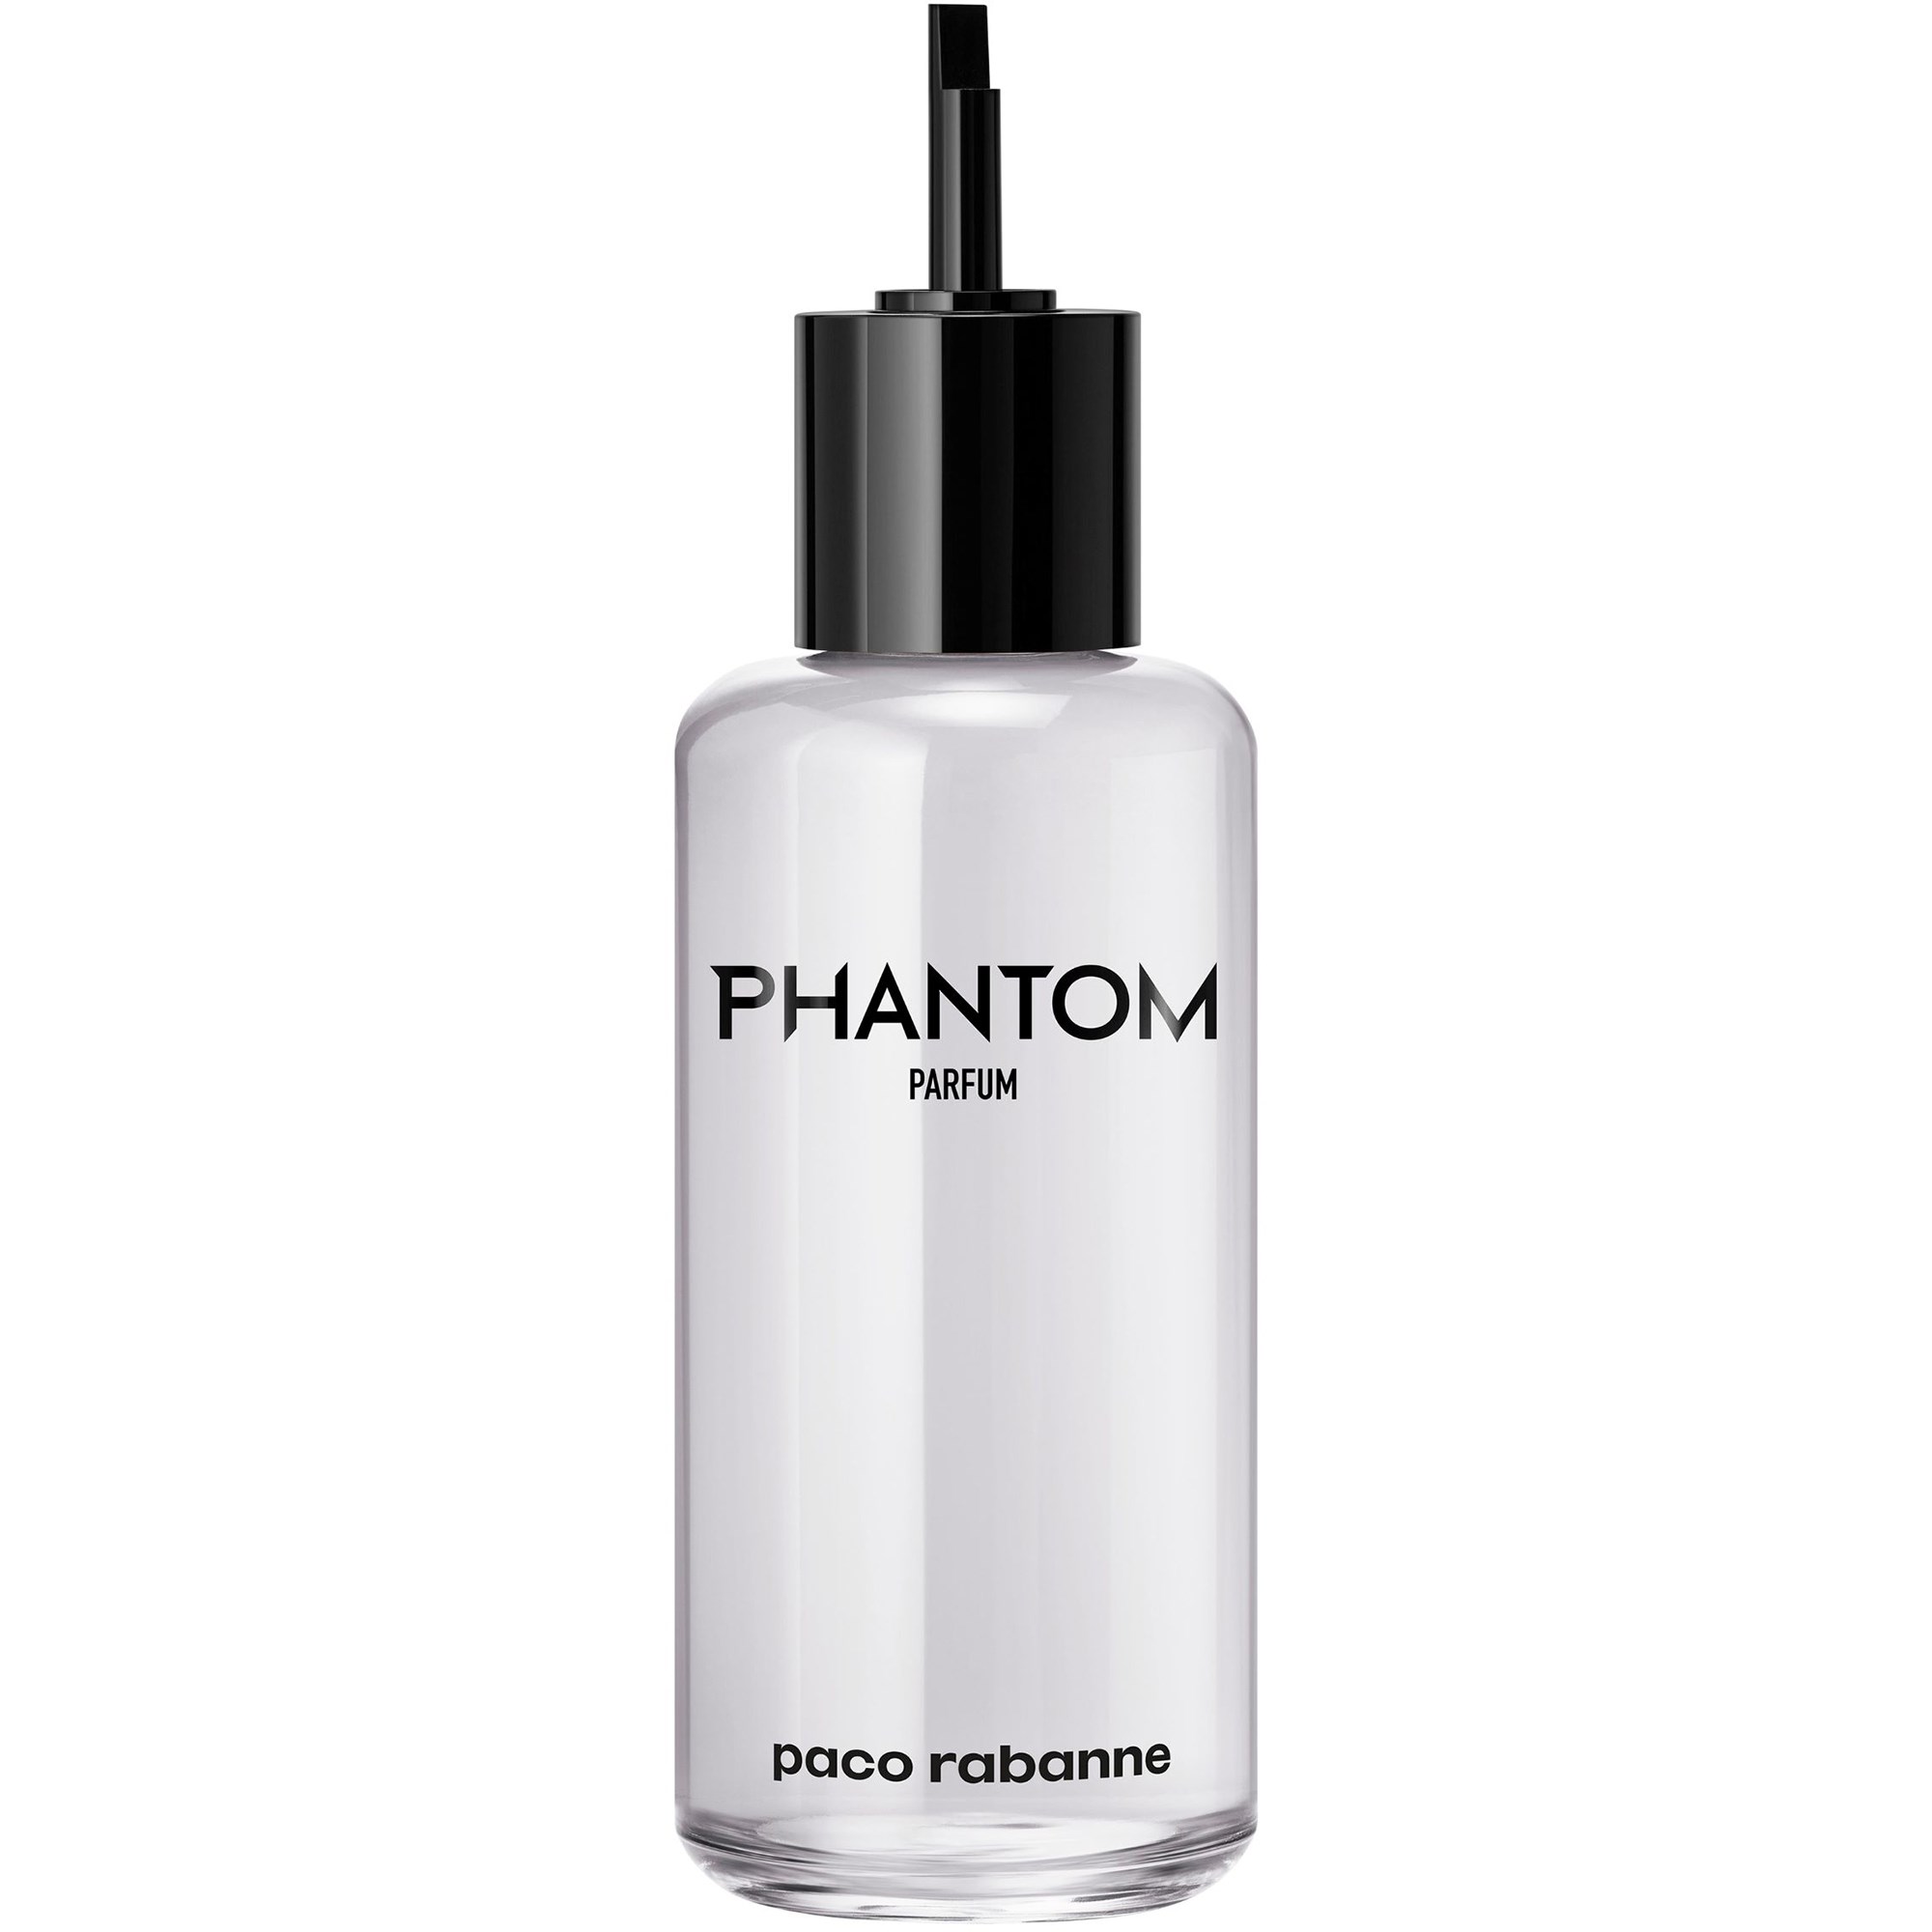 Zdjęcia - Perfuma męska Paco Rabanne Rabanne Phantom Parfum Refill 200 ml 